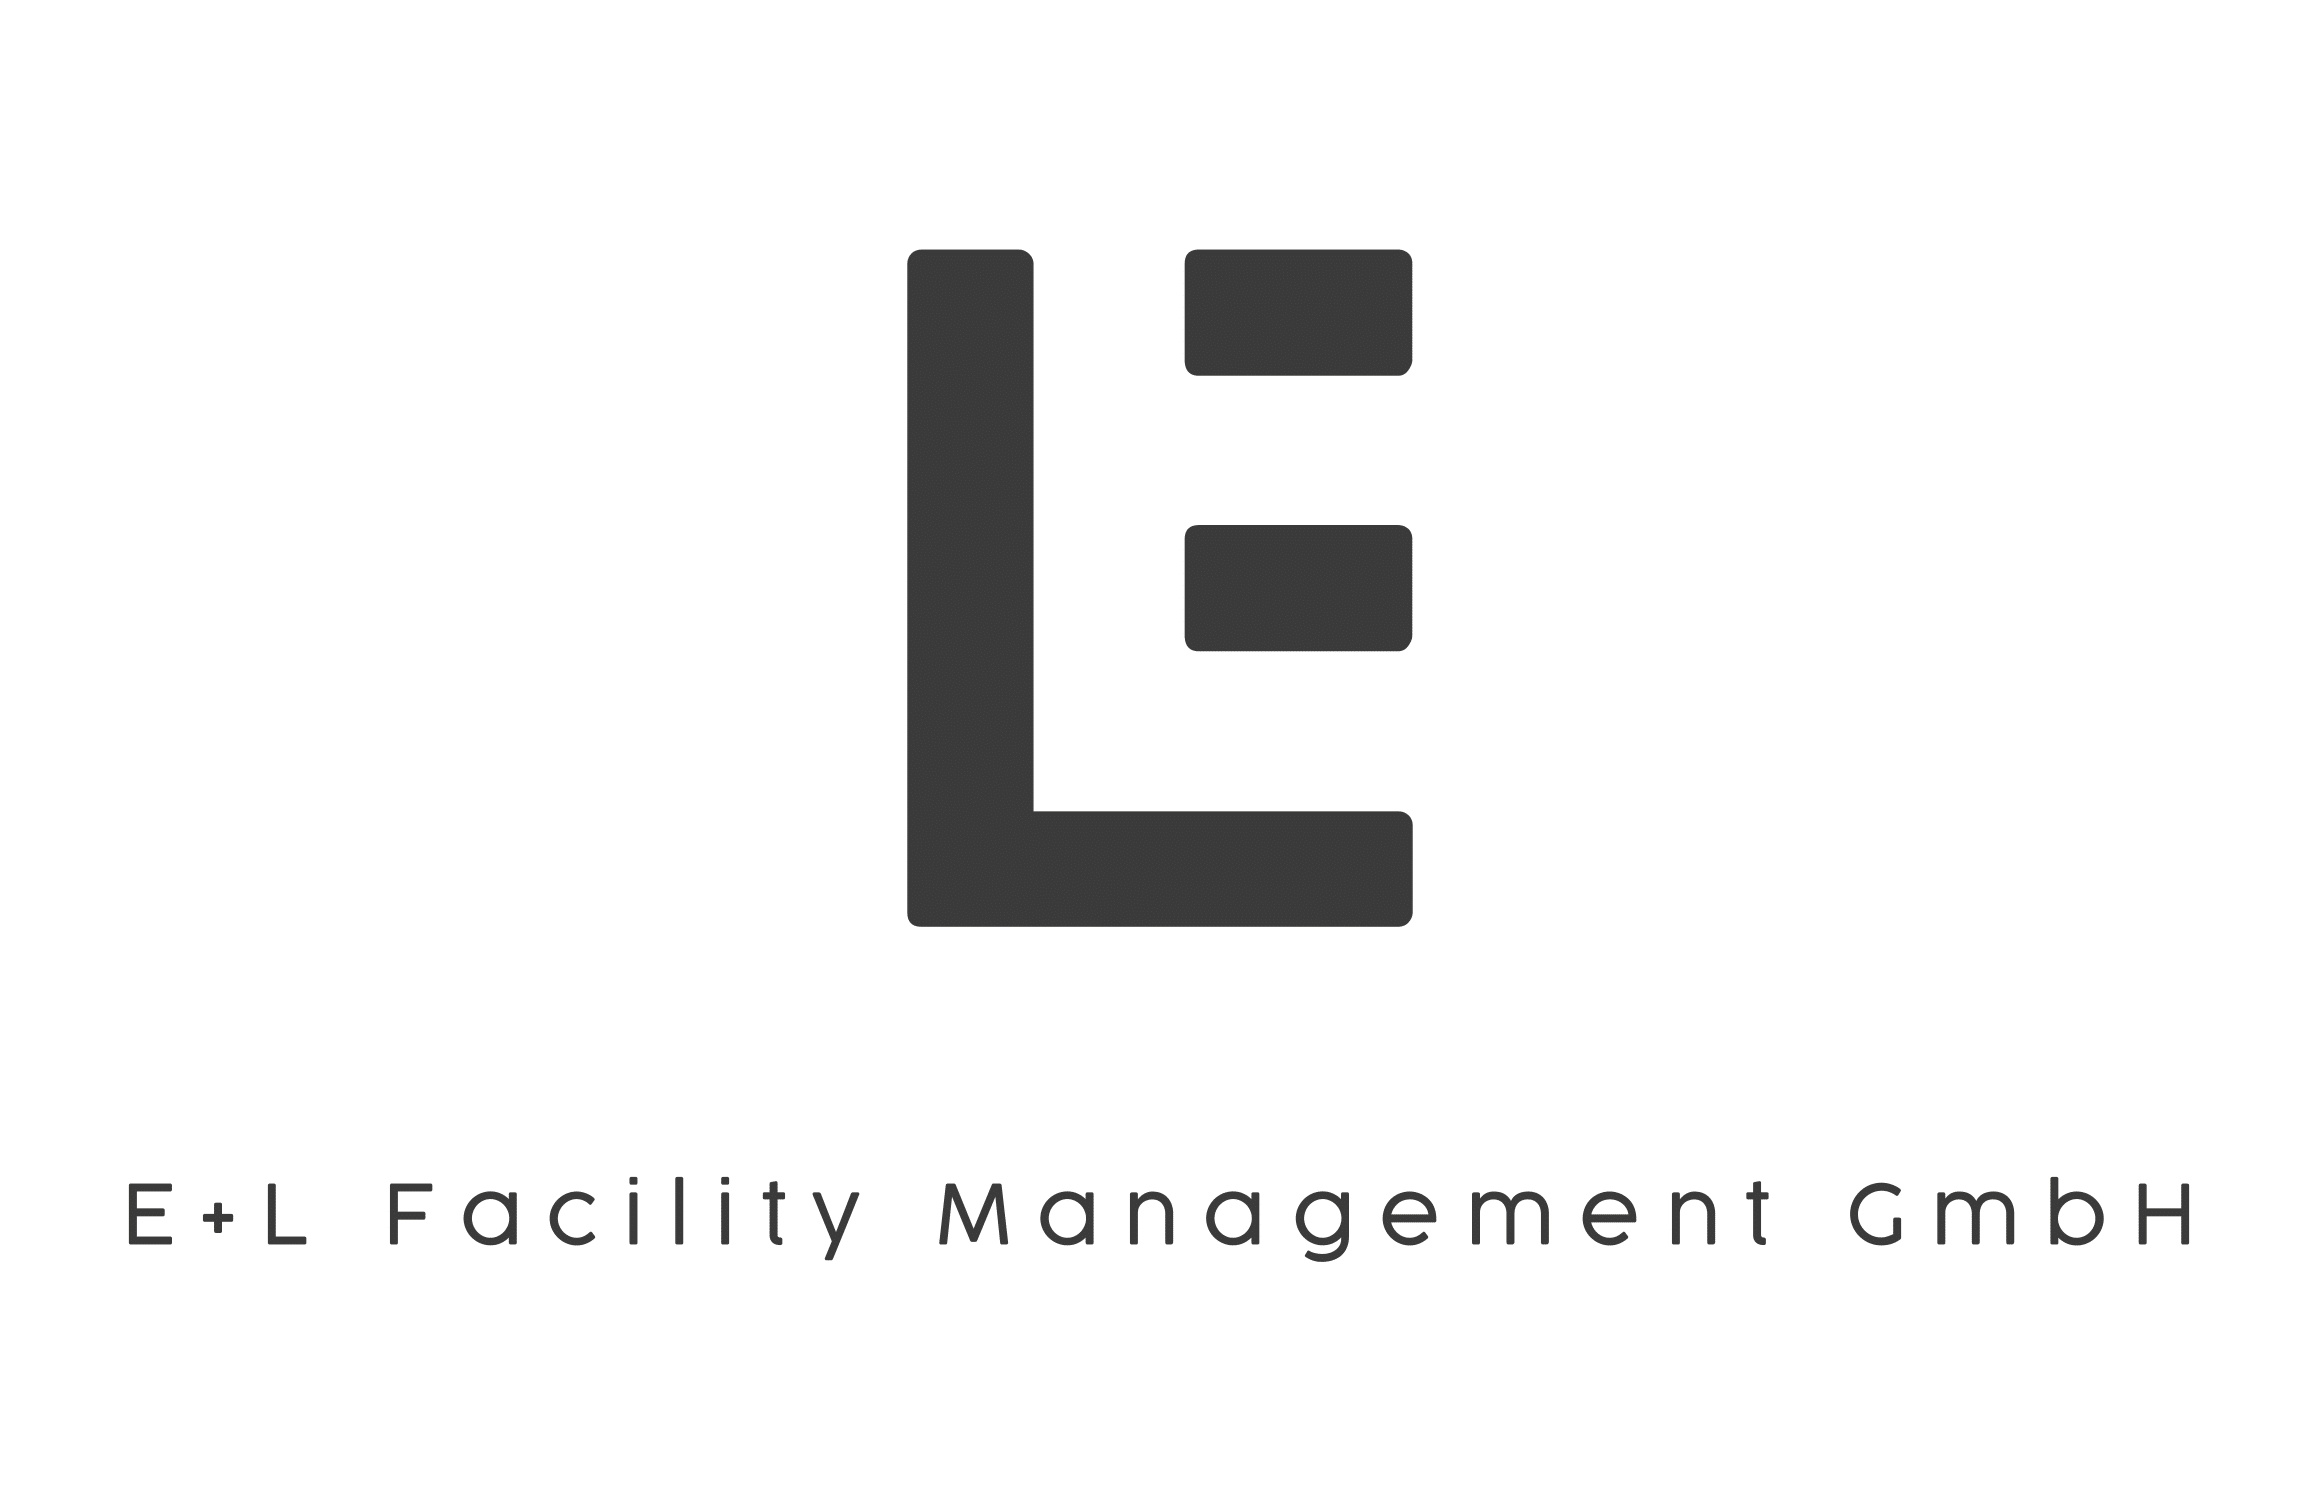 E+L Facility Management GmbH